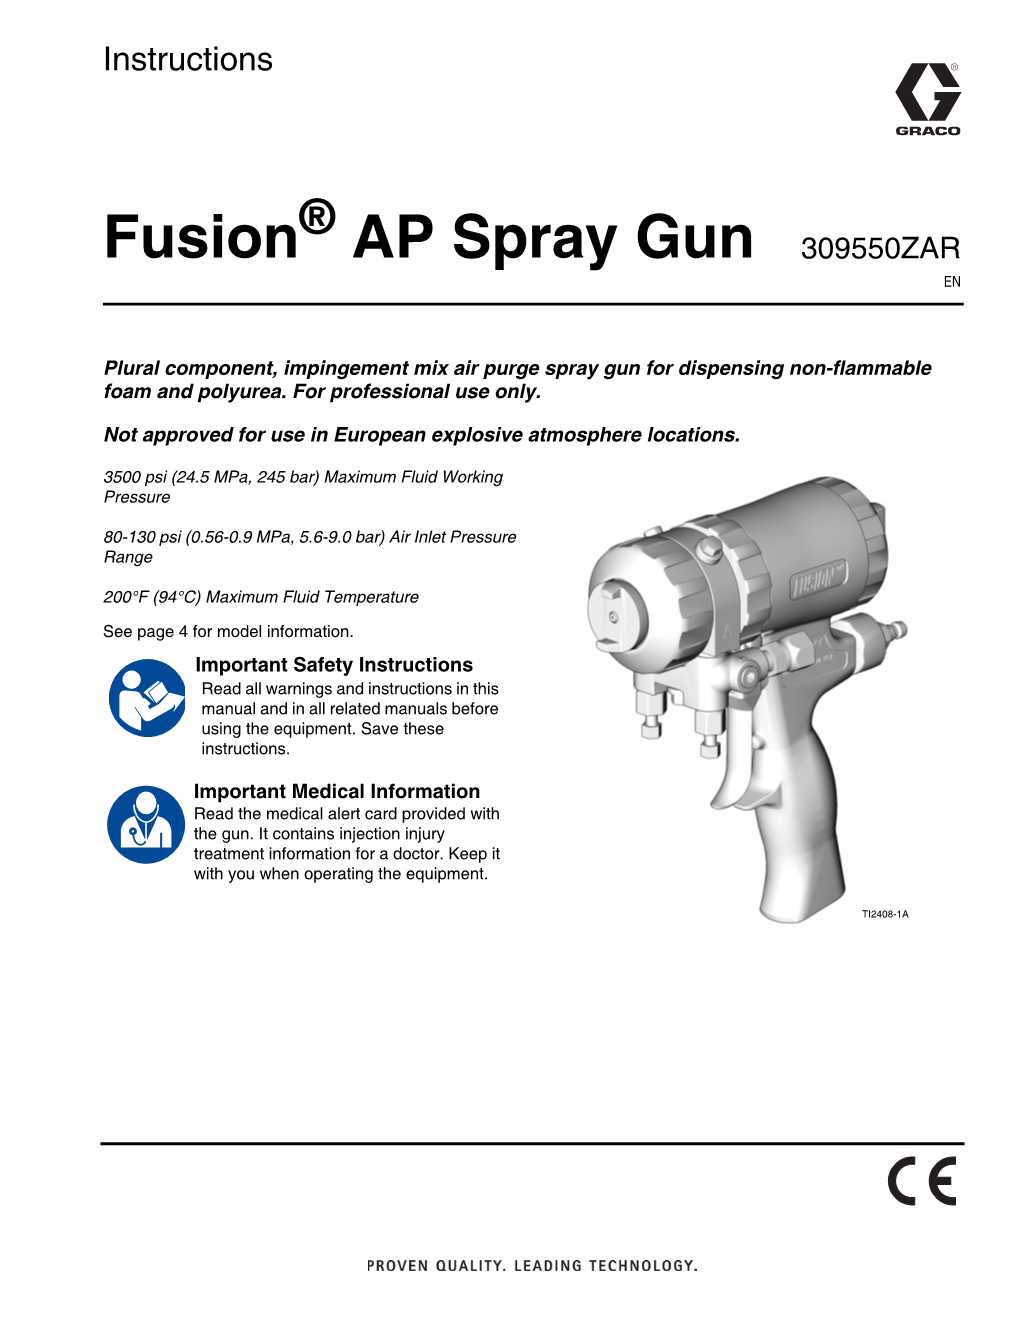 309550ZAR, Manual, Fusion AP Spray Gun, Instructions, English